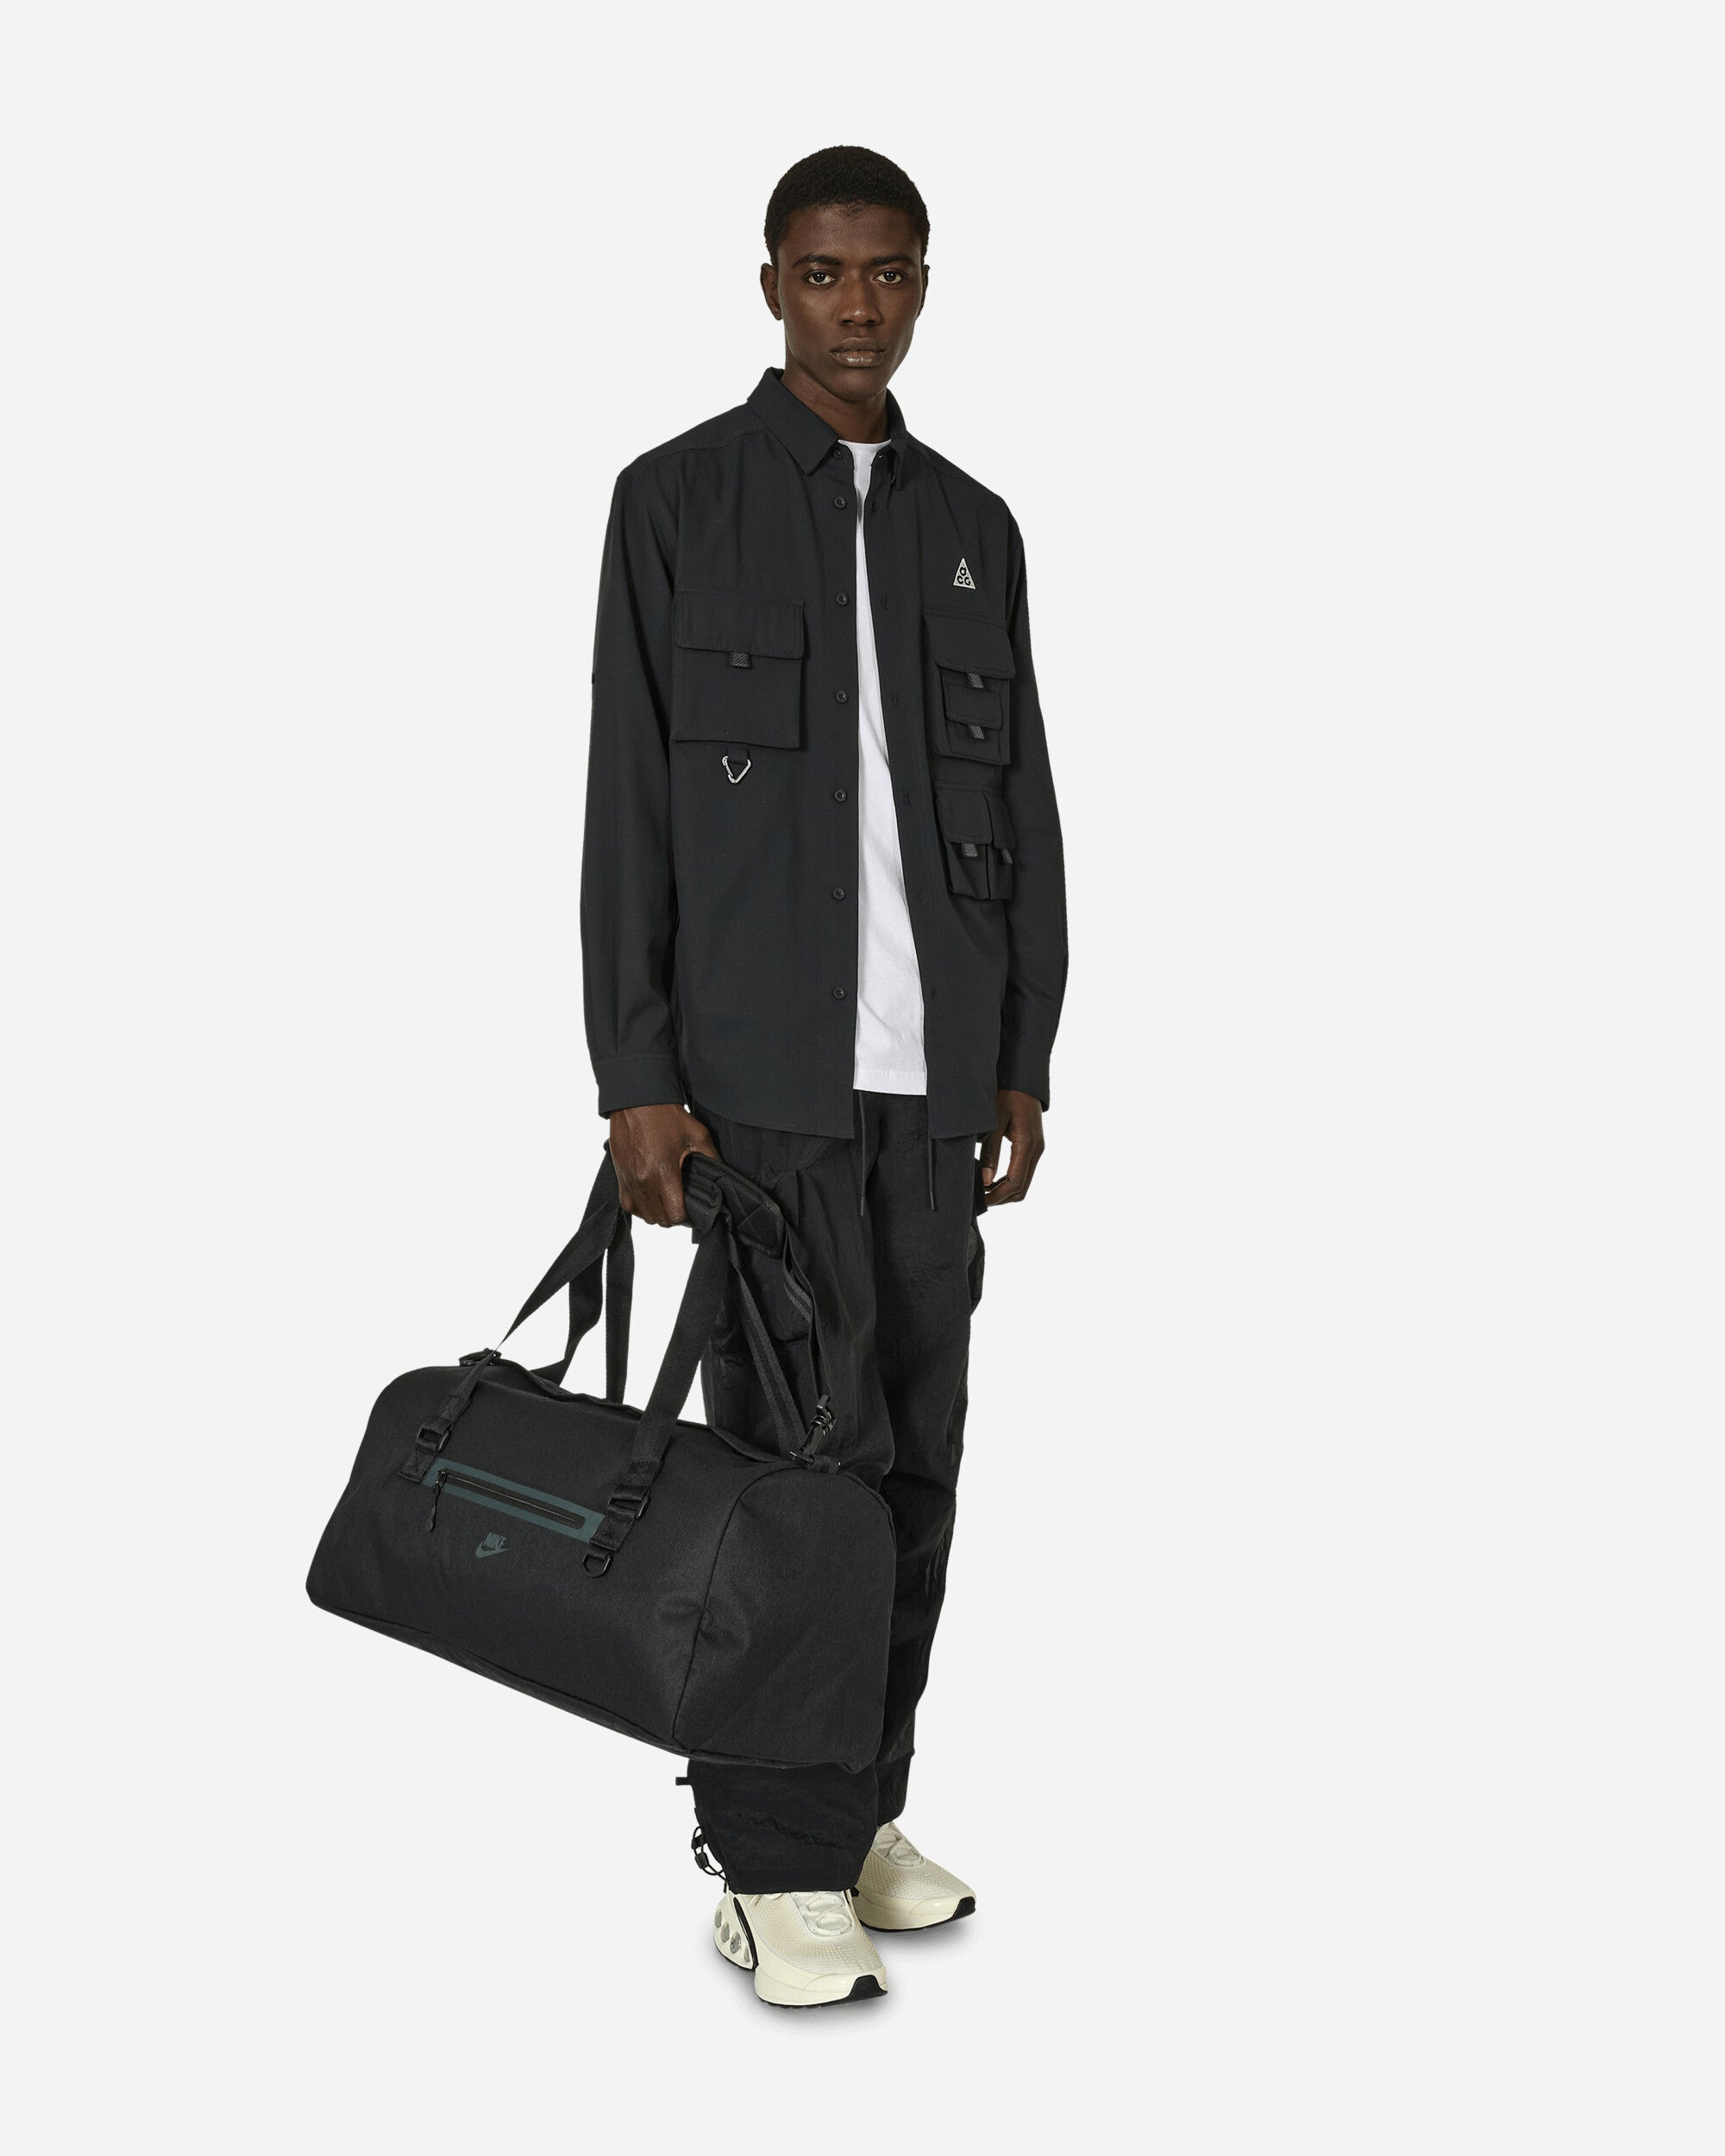 Nike Nk Elmntl Prm Duff Black/Black Bags and Backpacks Travel Bags FB3037-010